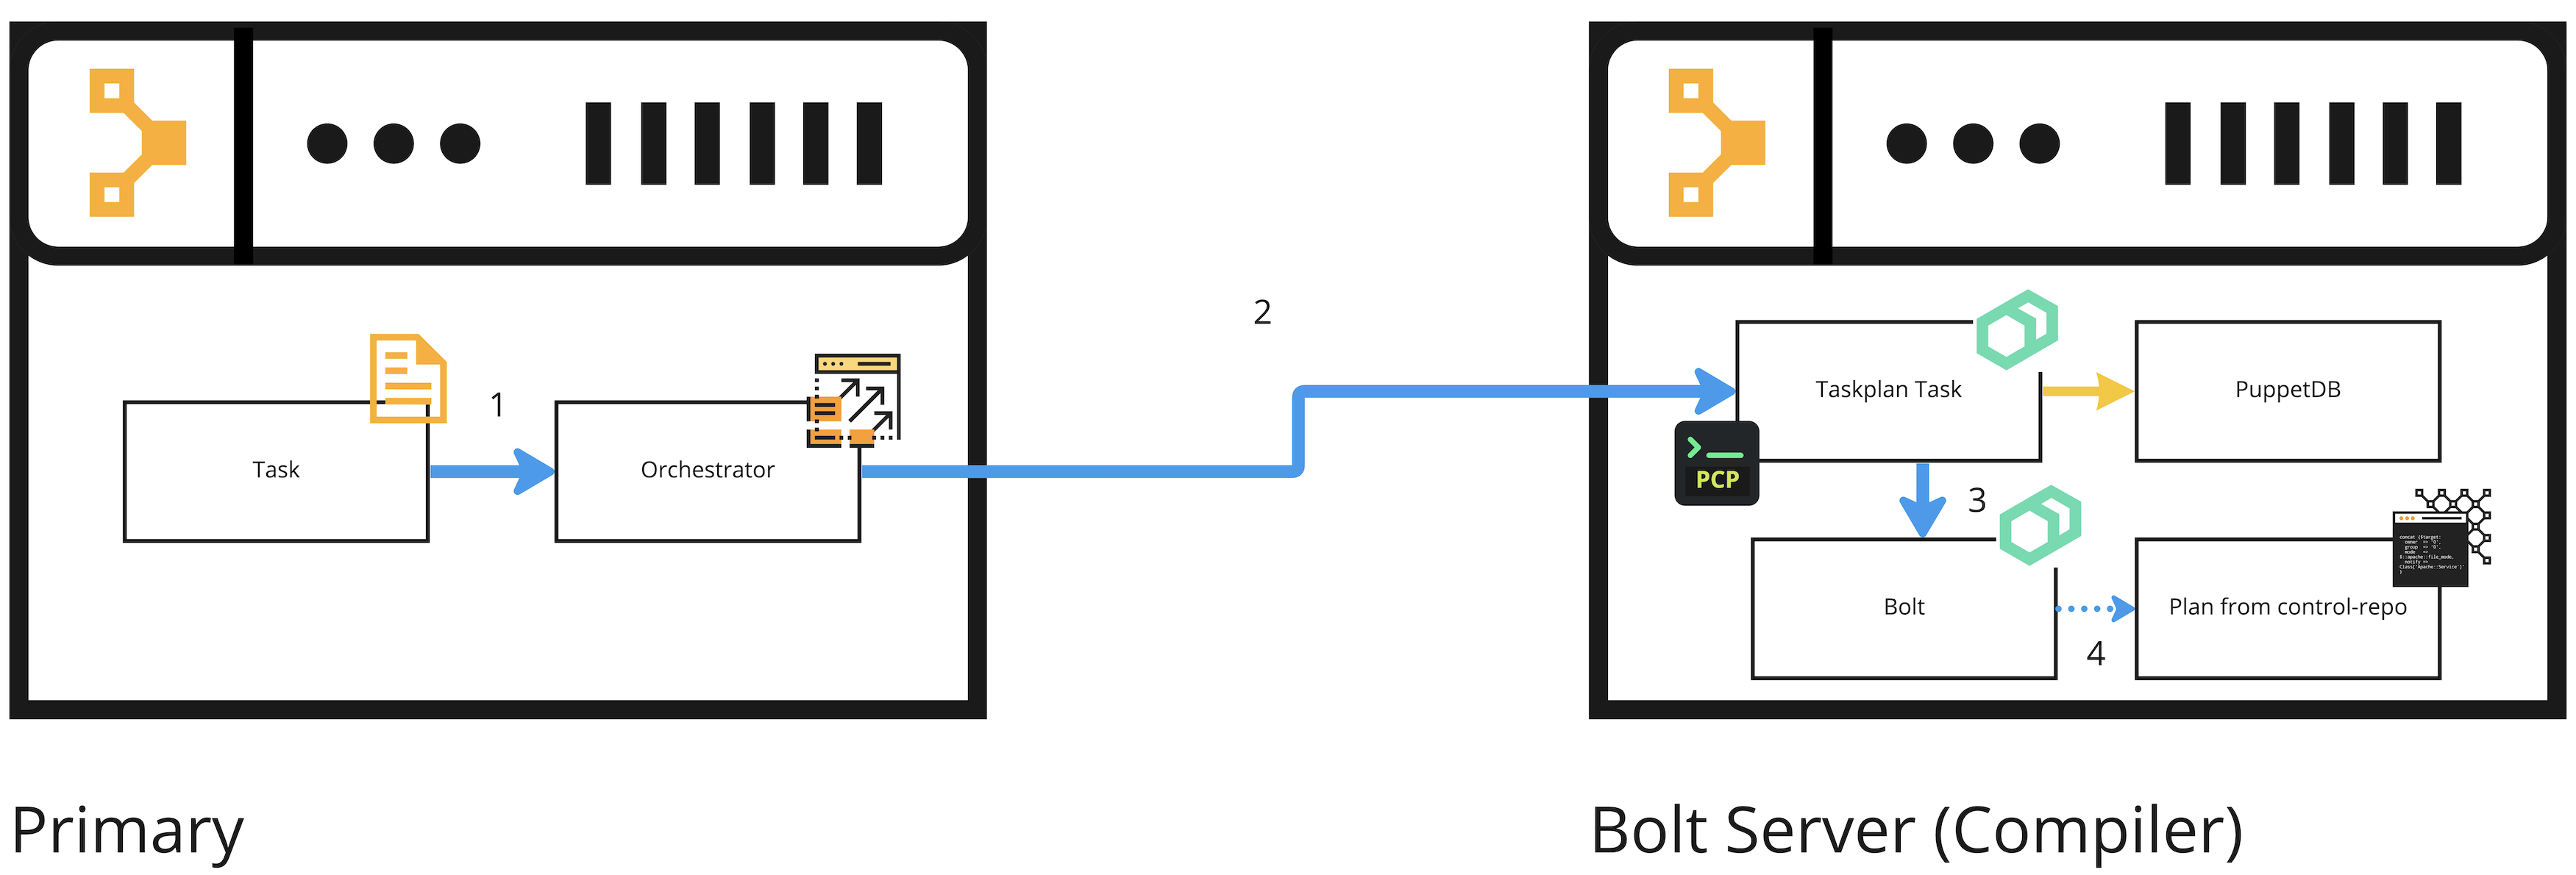 bolt-server-process